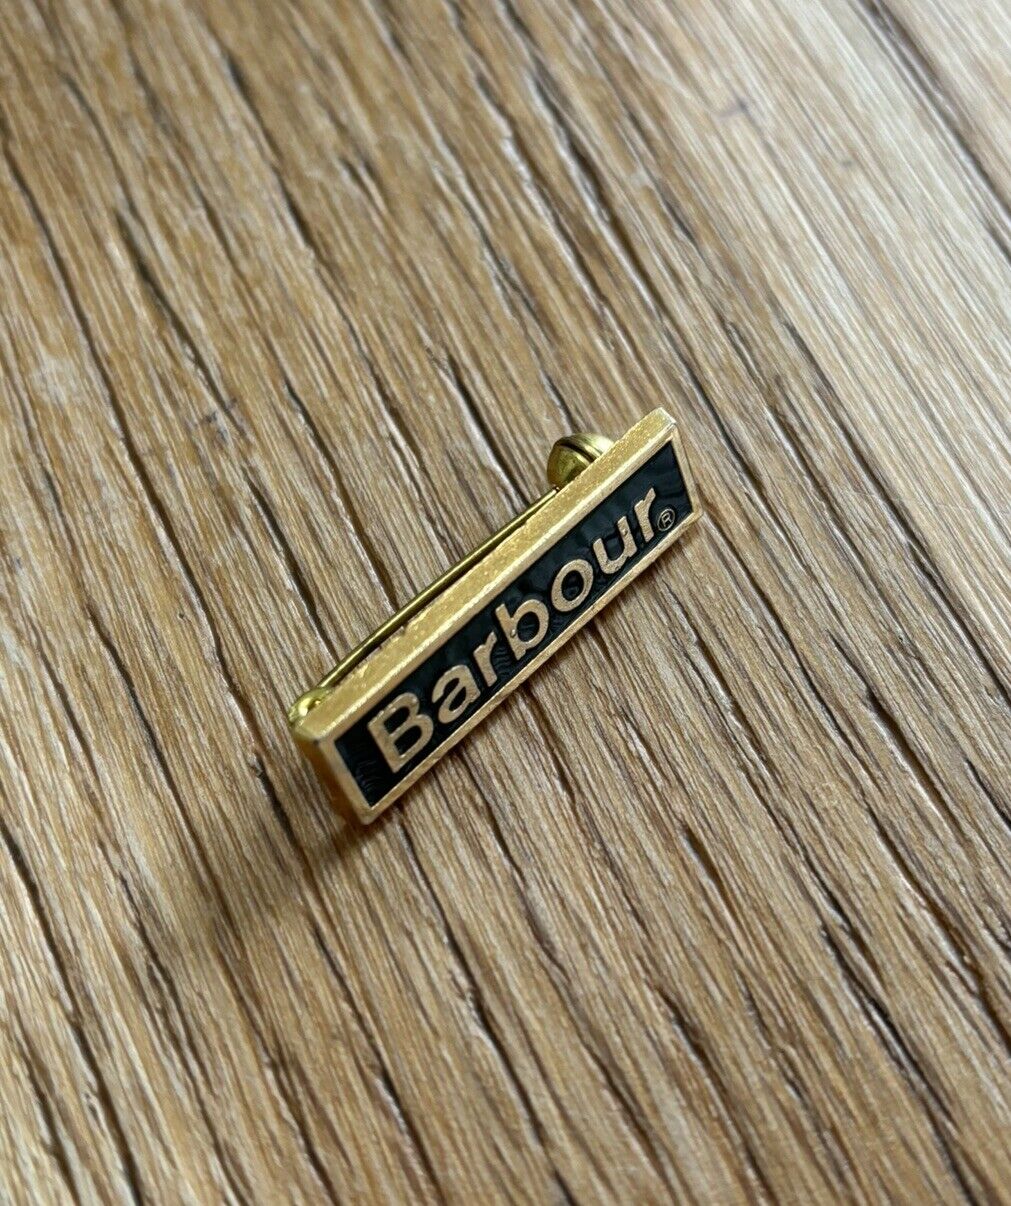 Vintage Barbour Enamel Pin Badge